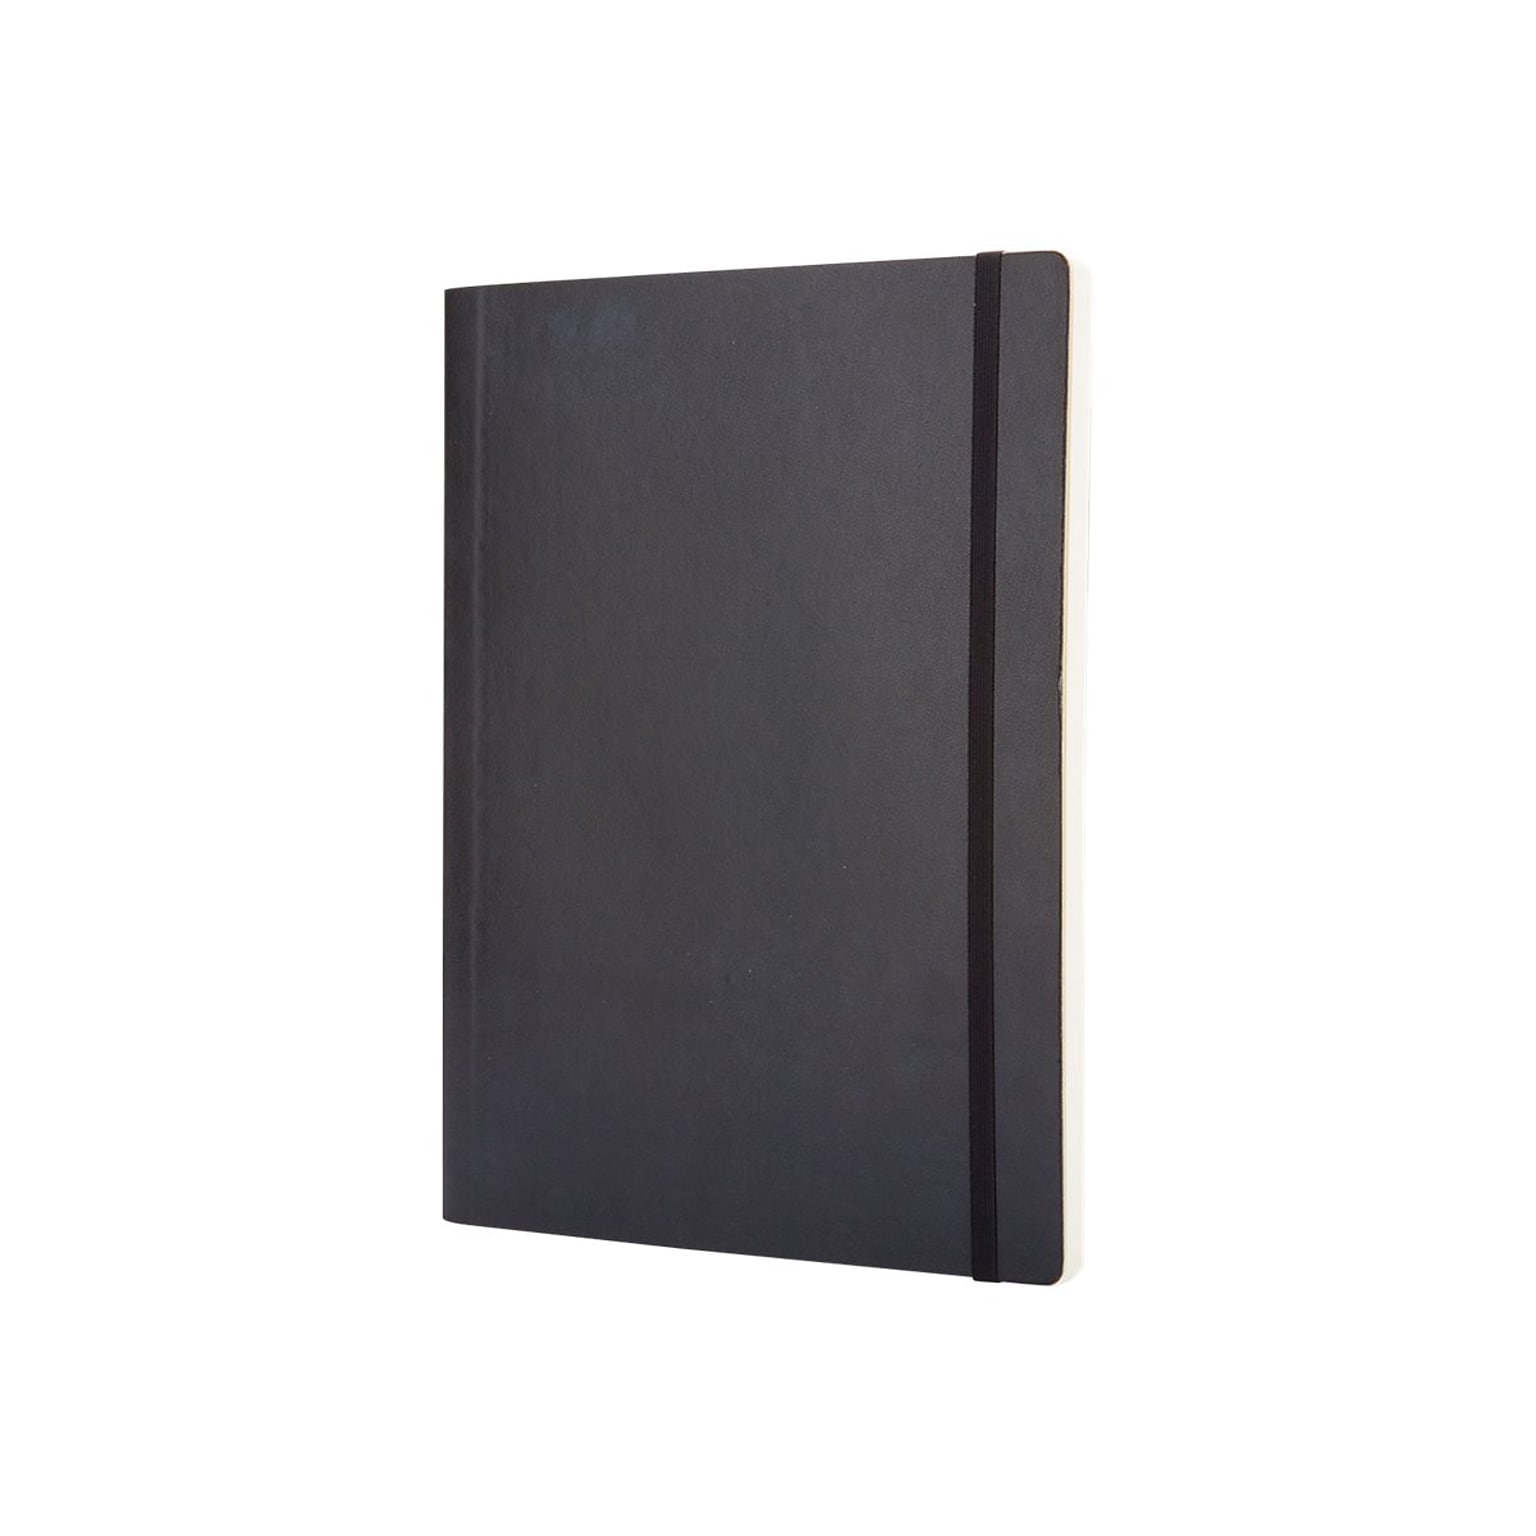 Moleskine Classic Professional Notebooks, 5 x 8.25, 120 Sheets, Black (701146)